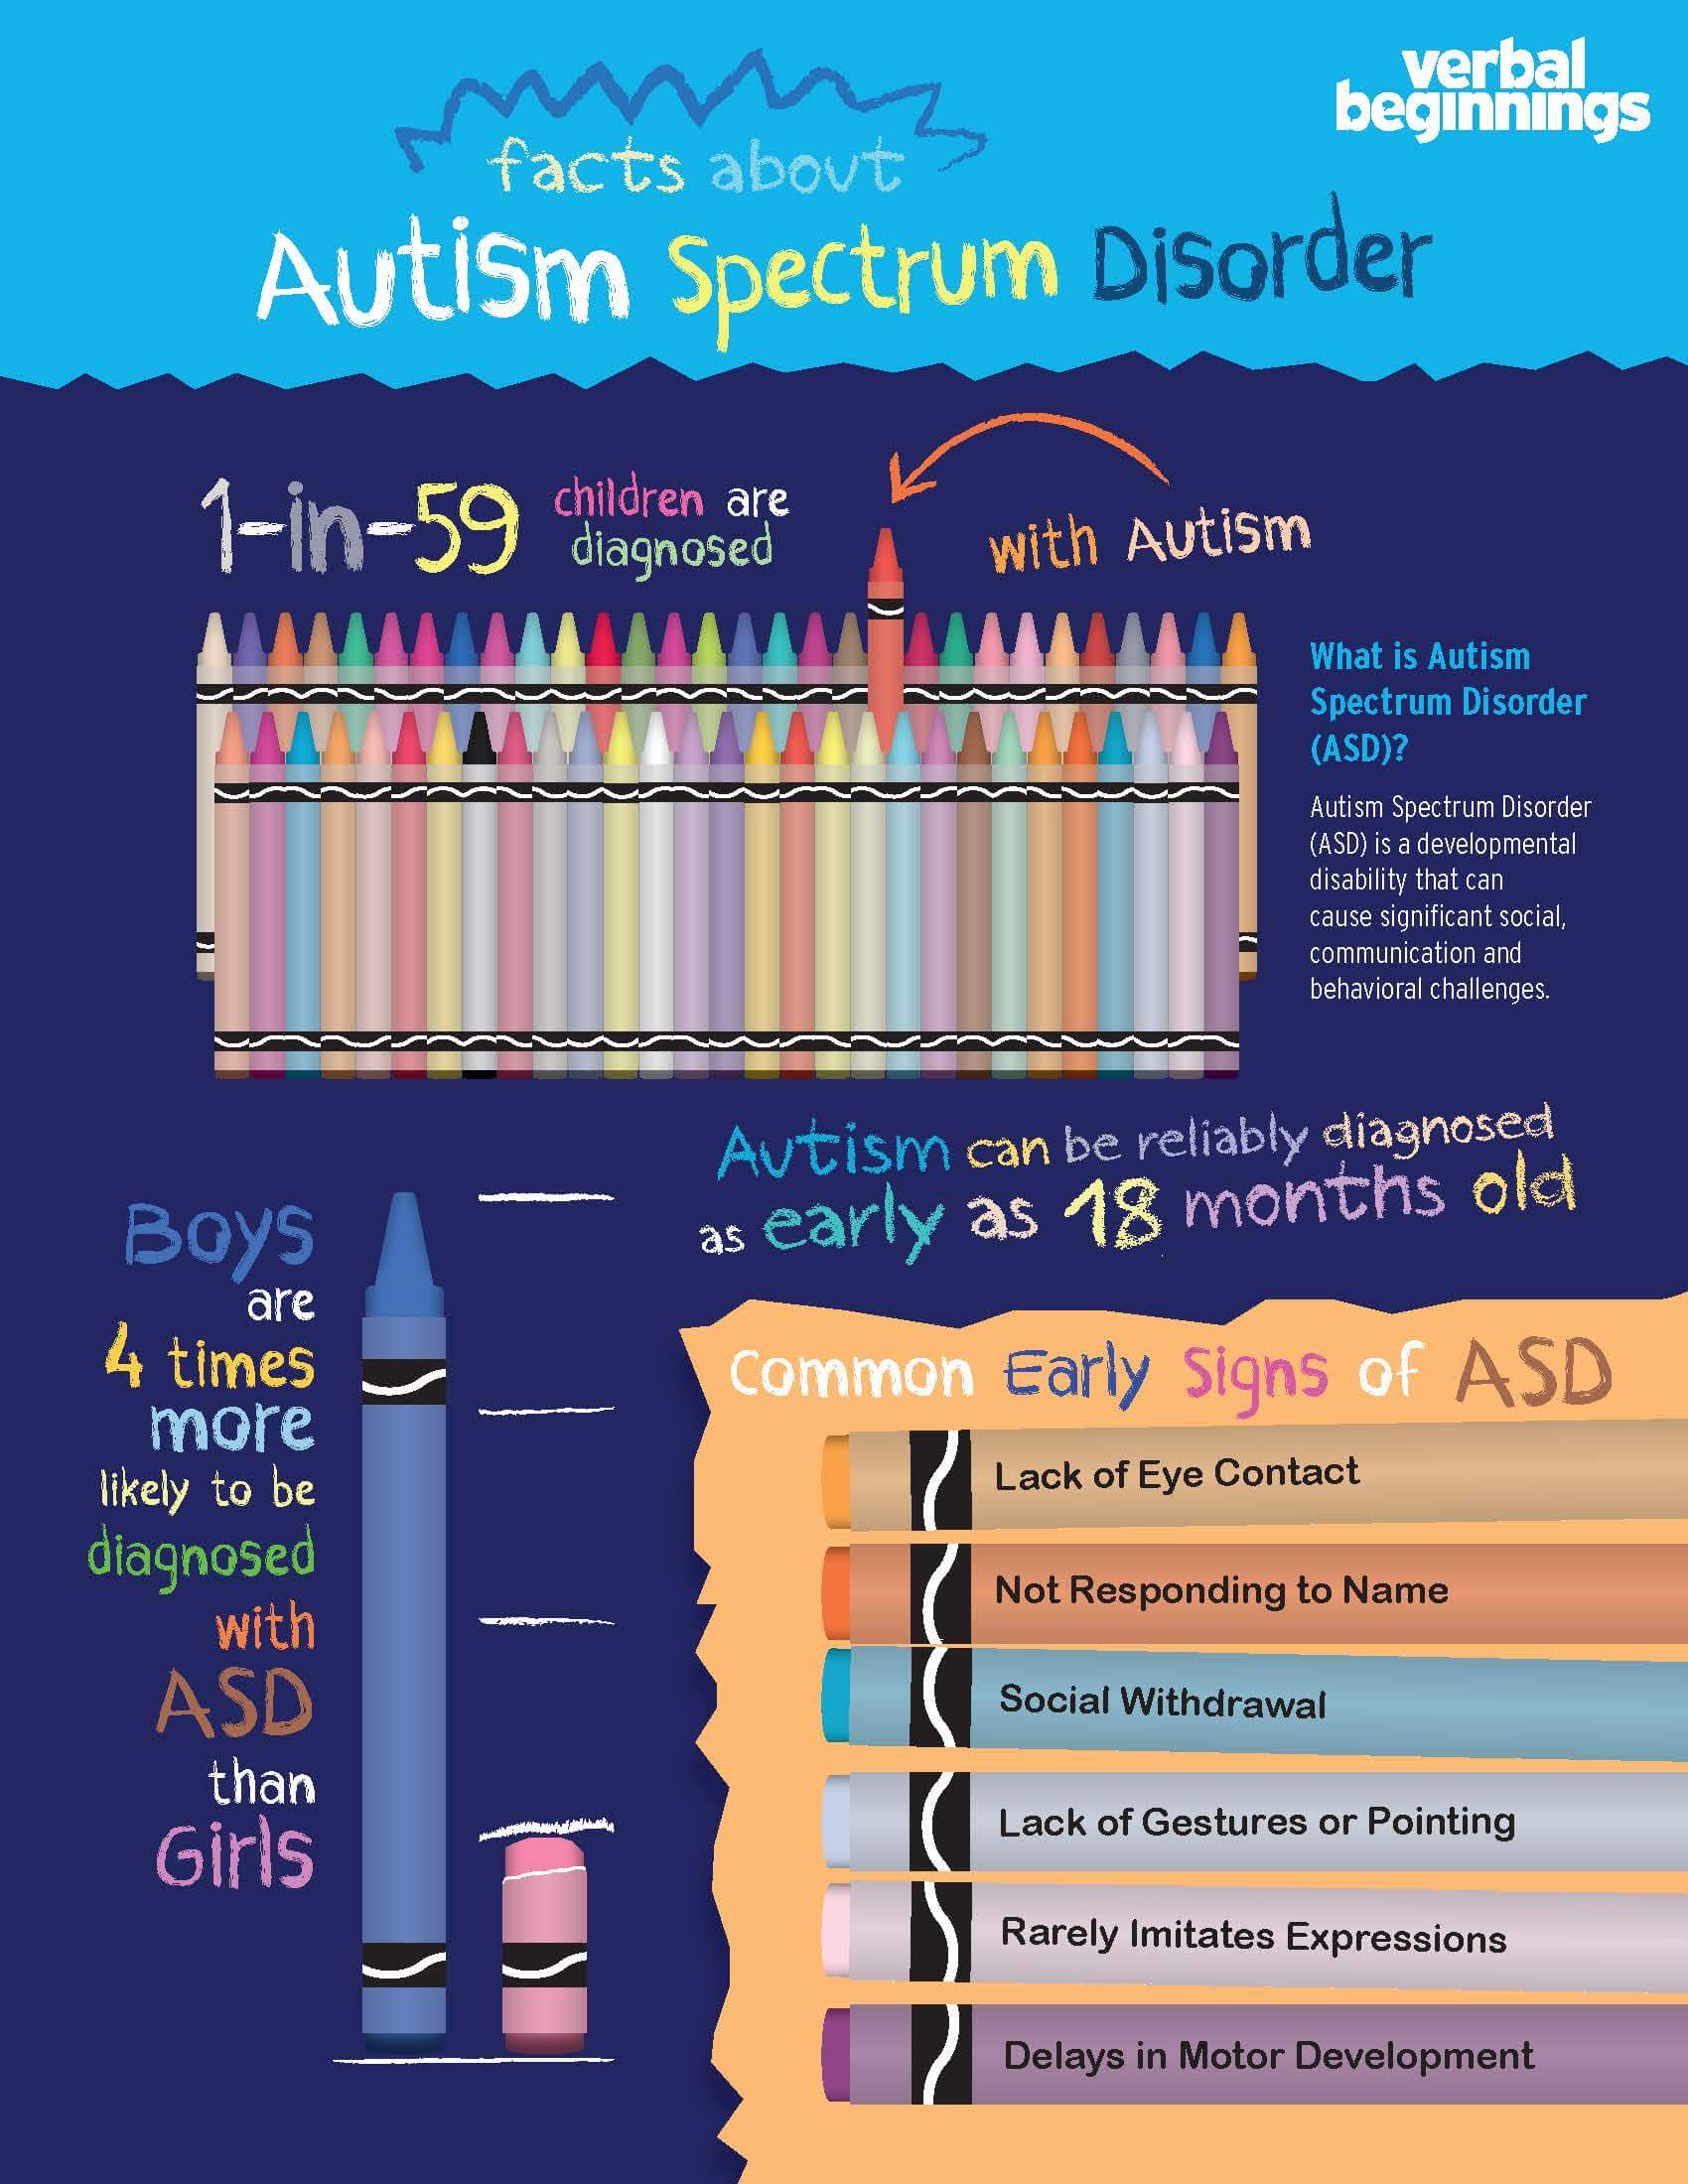 Autism Spectrum Disorder Defining Dimensions And Subgroups Springerlink